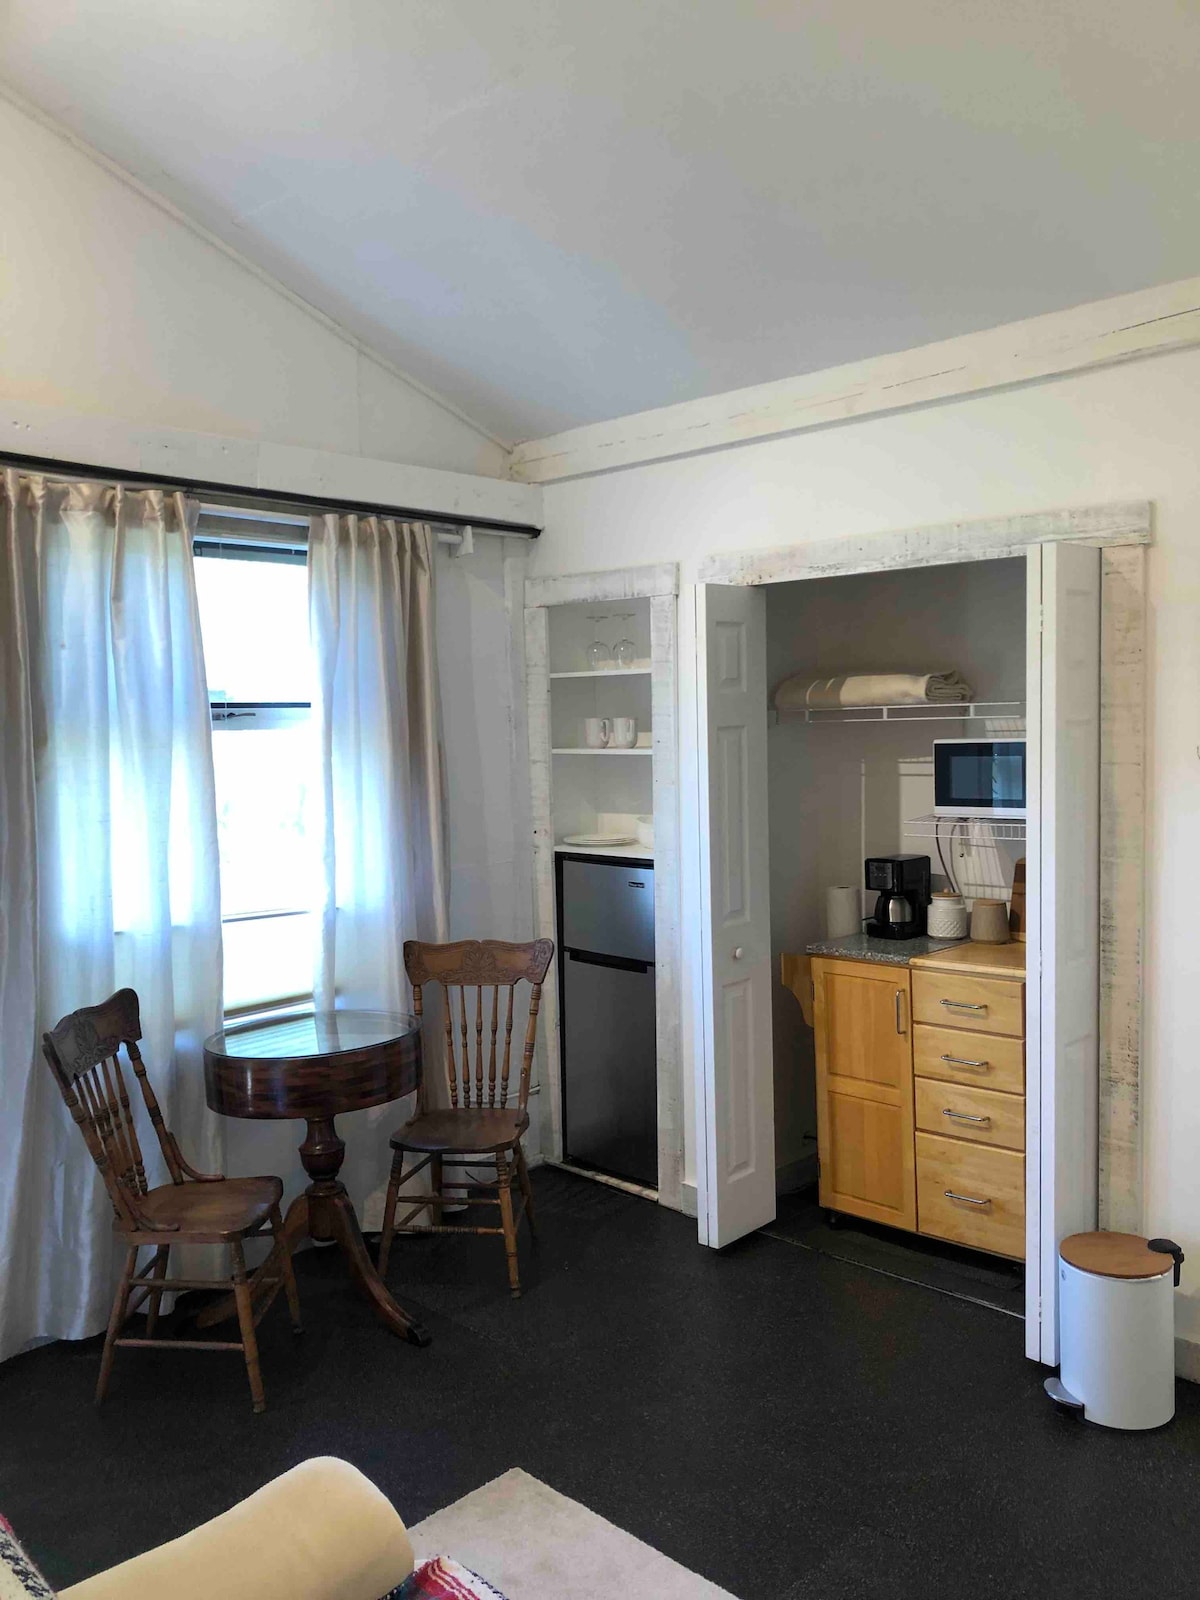 Claddagh Suite; a cozy corner